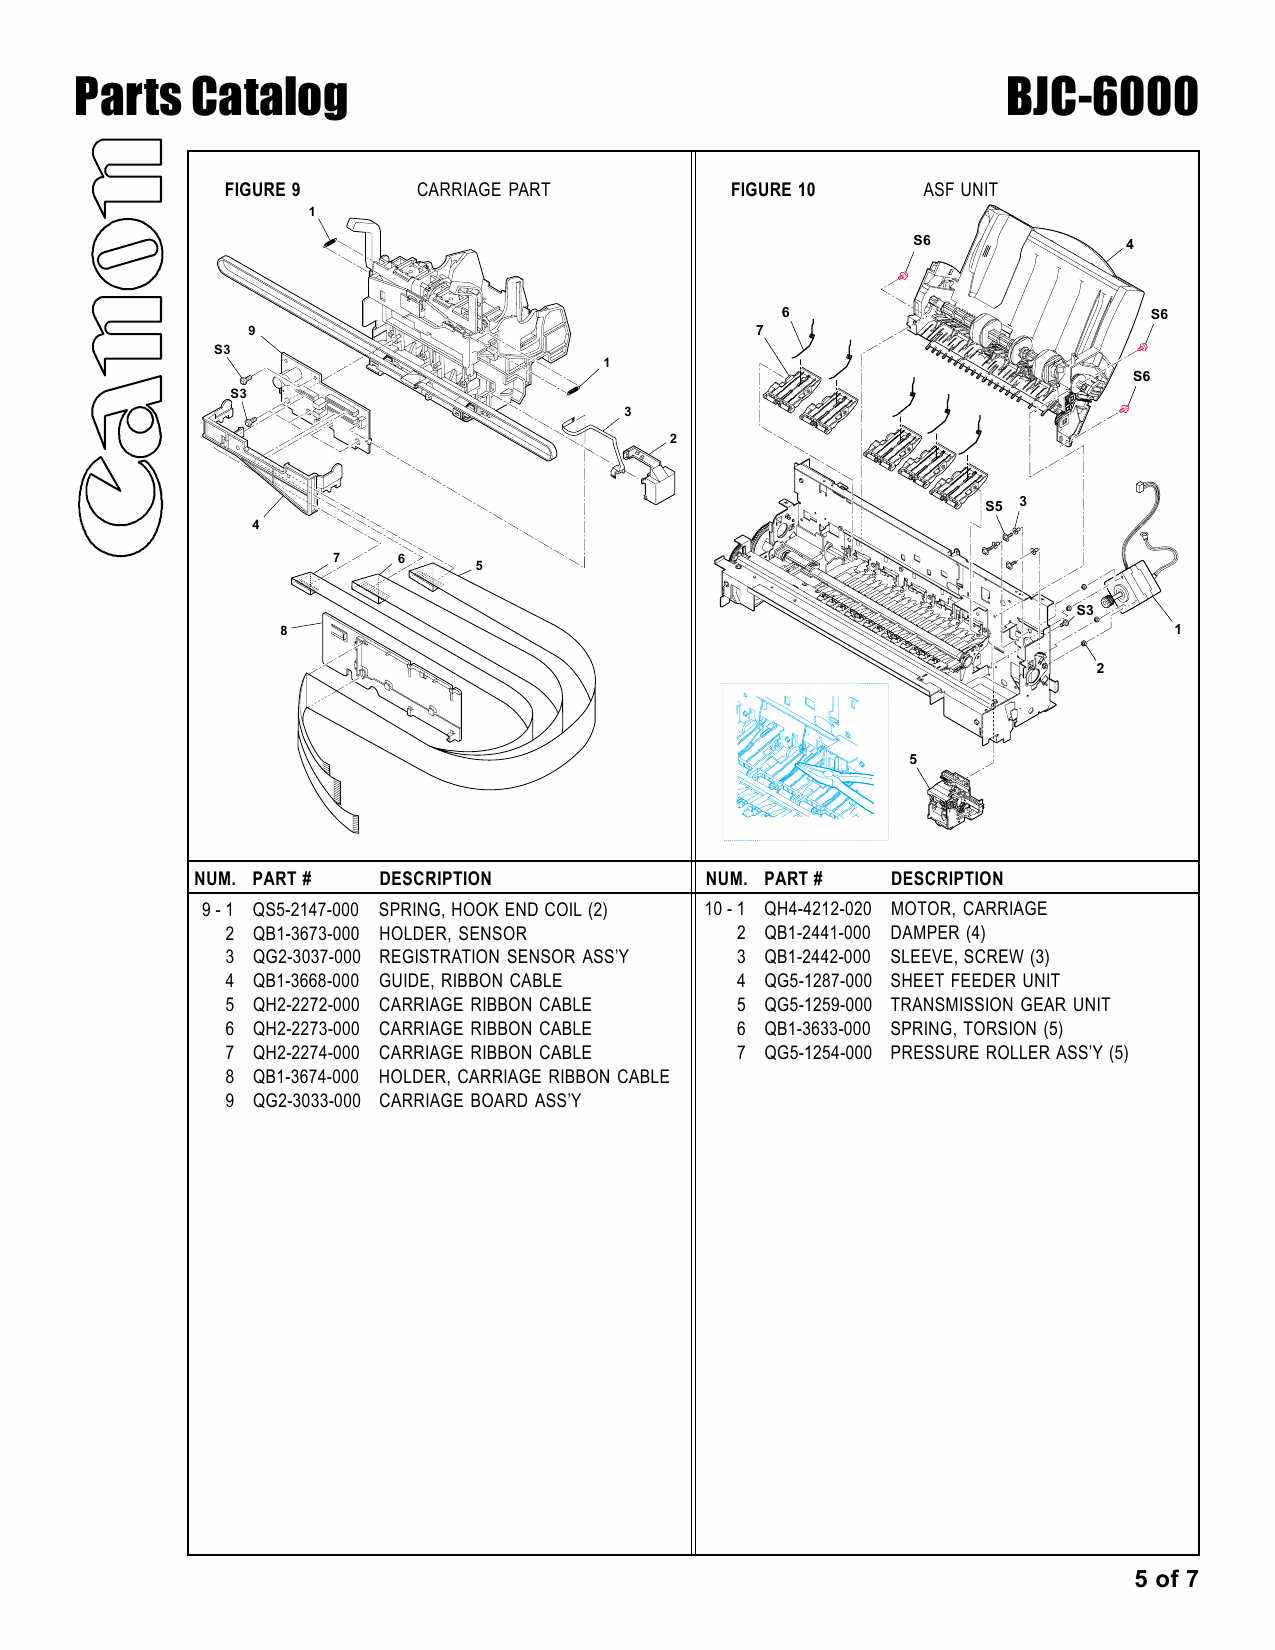 Canon BubbleJet BJC-6000 6010 Parts Catalog Manual-6